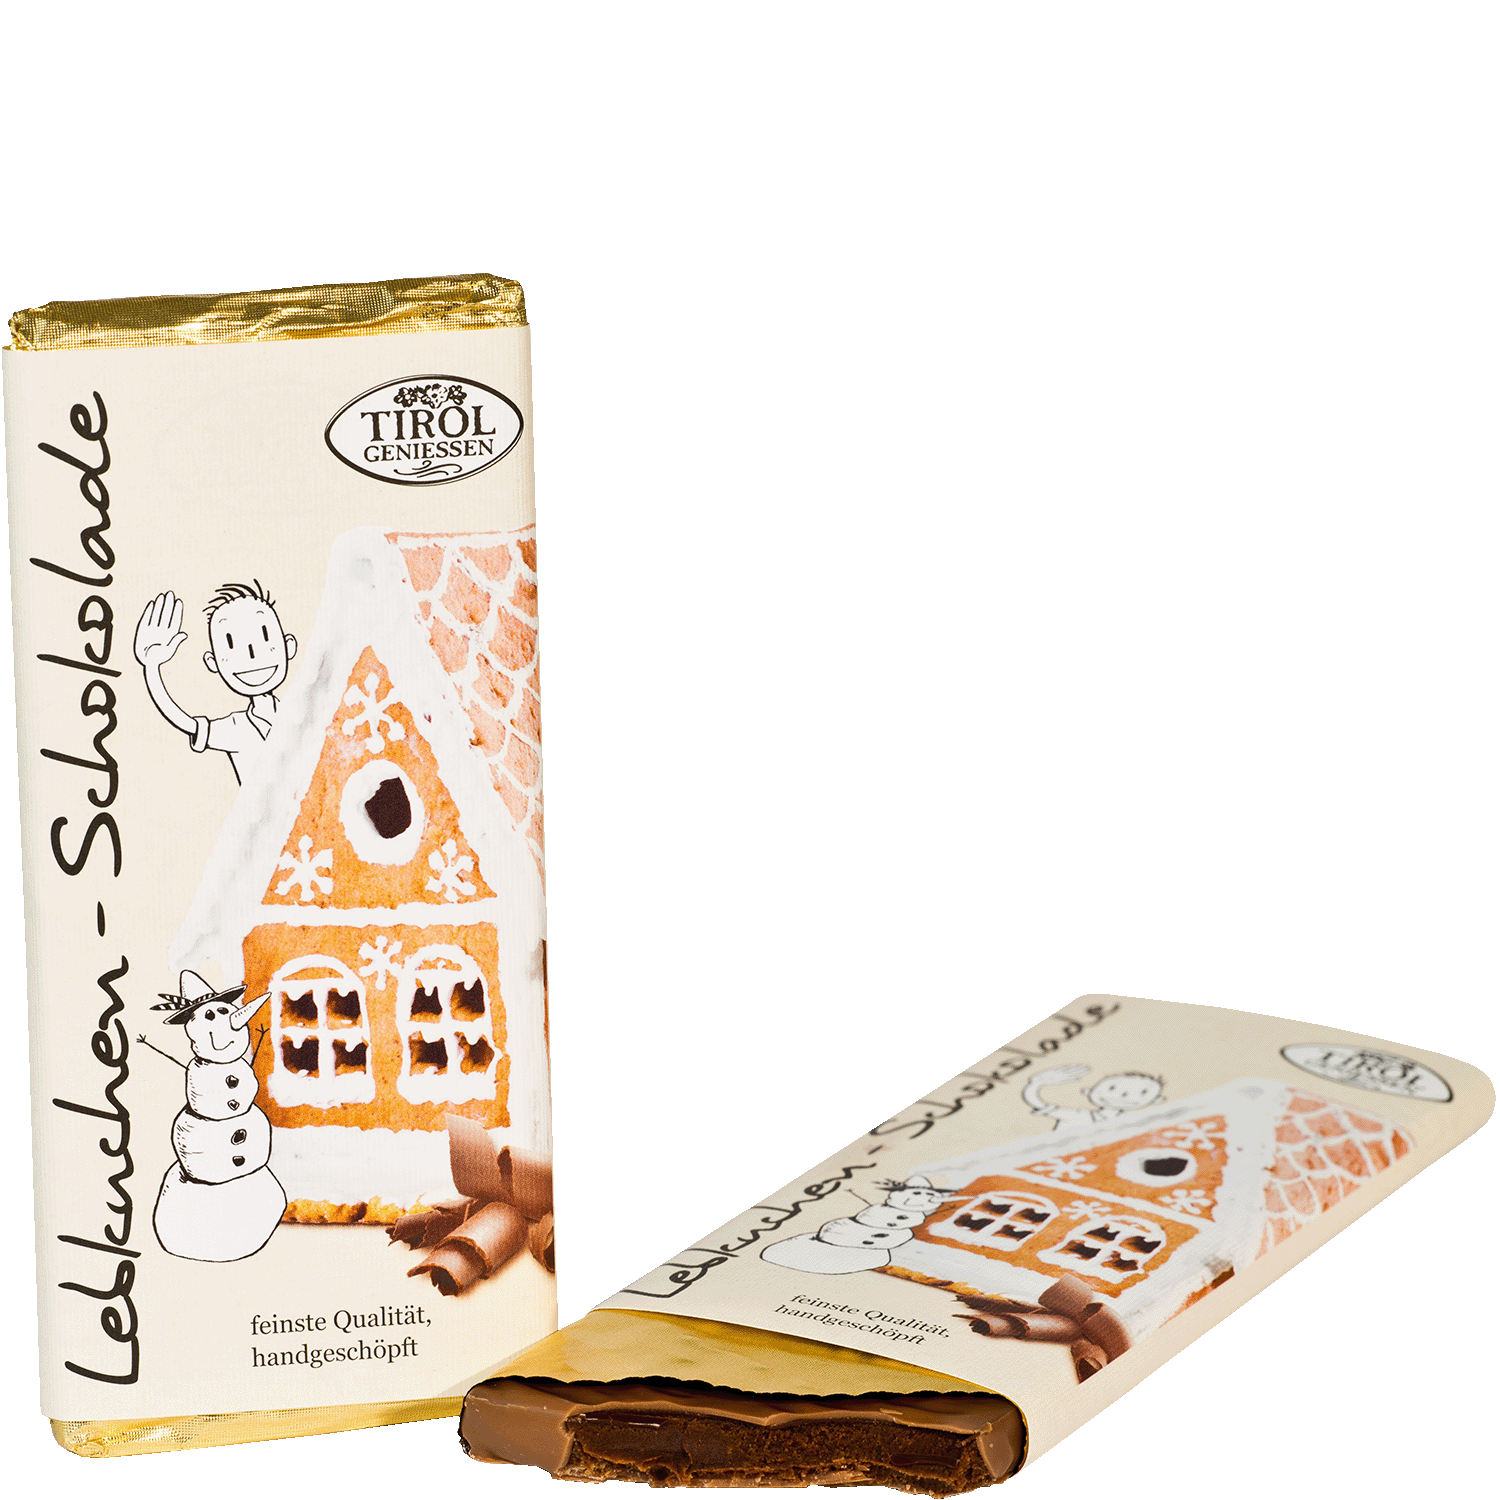 Gingerbread Chocolate from Austria from Tirol Geniessen